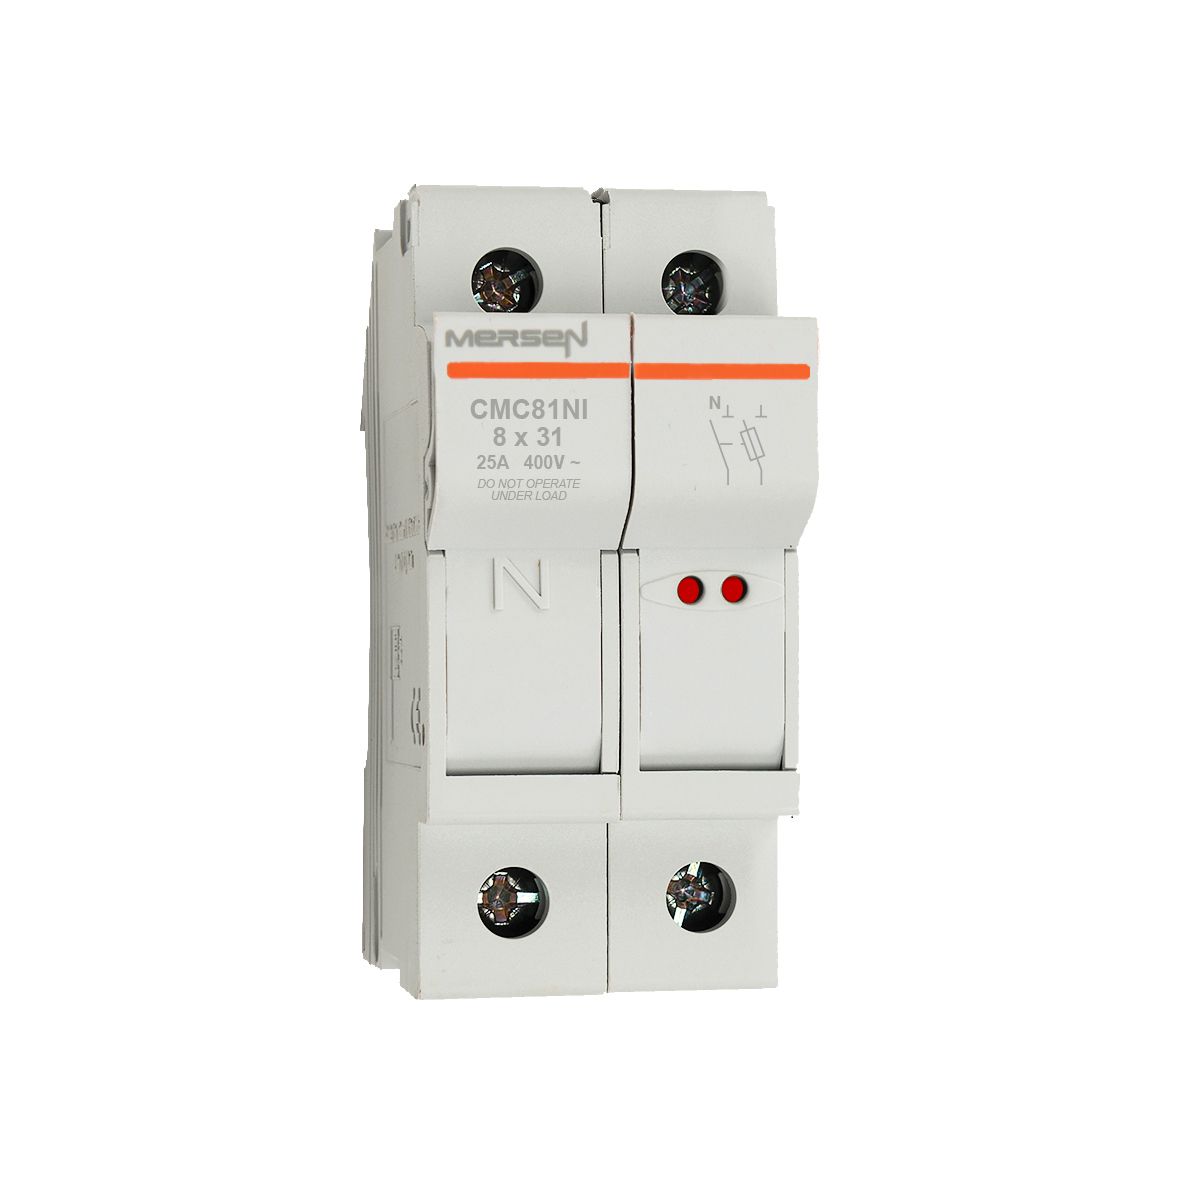 R1062684 - CMC8 modular fuse holder,IEC,1P+N,indicator light,8x32,DIN rail mounting,IP20